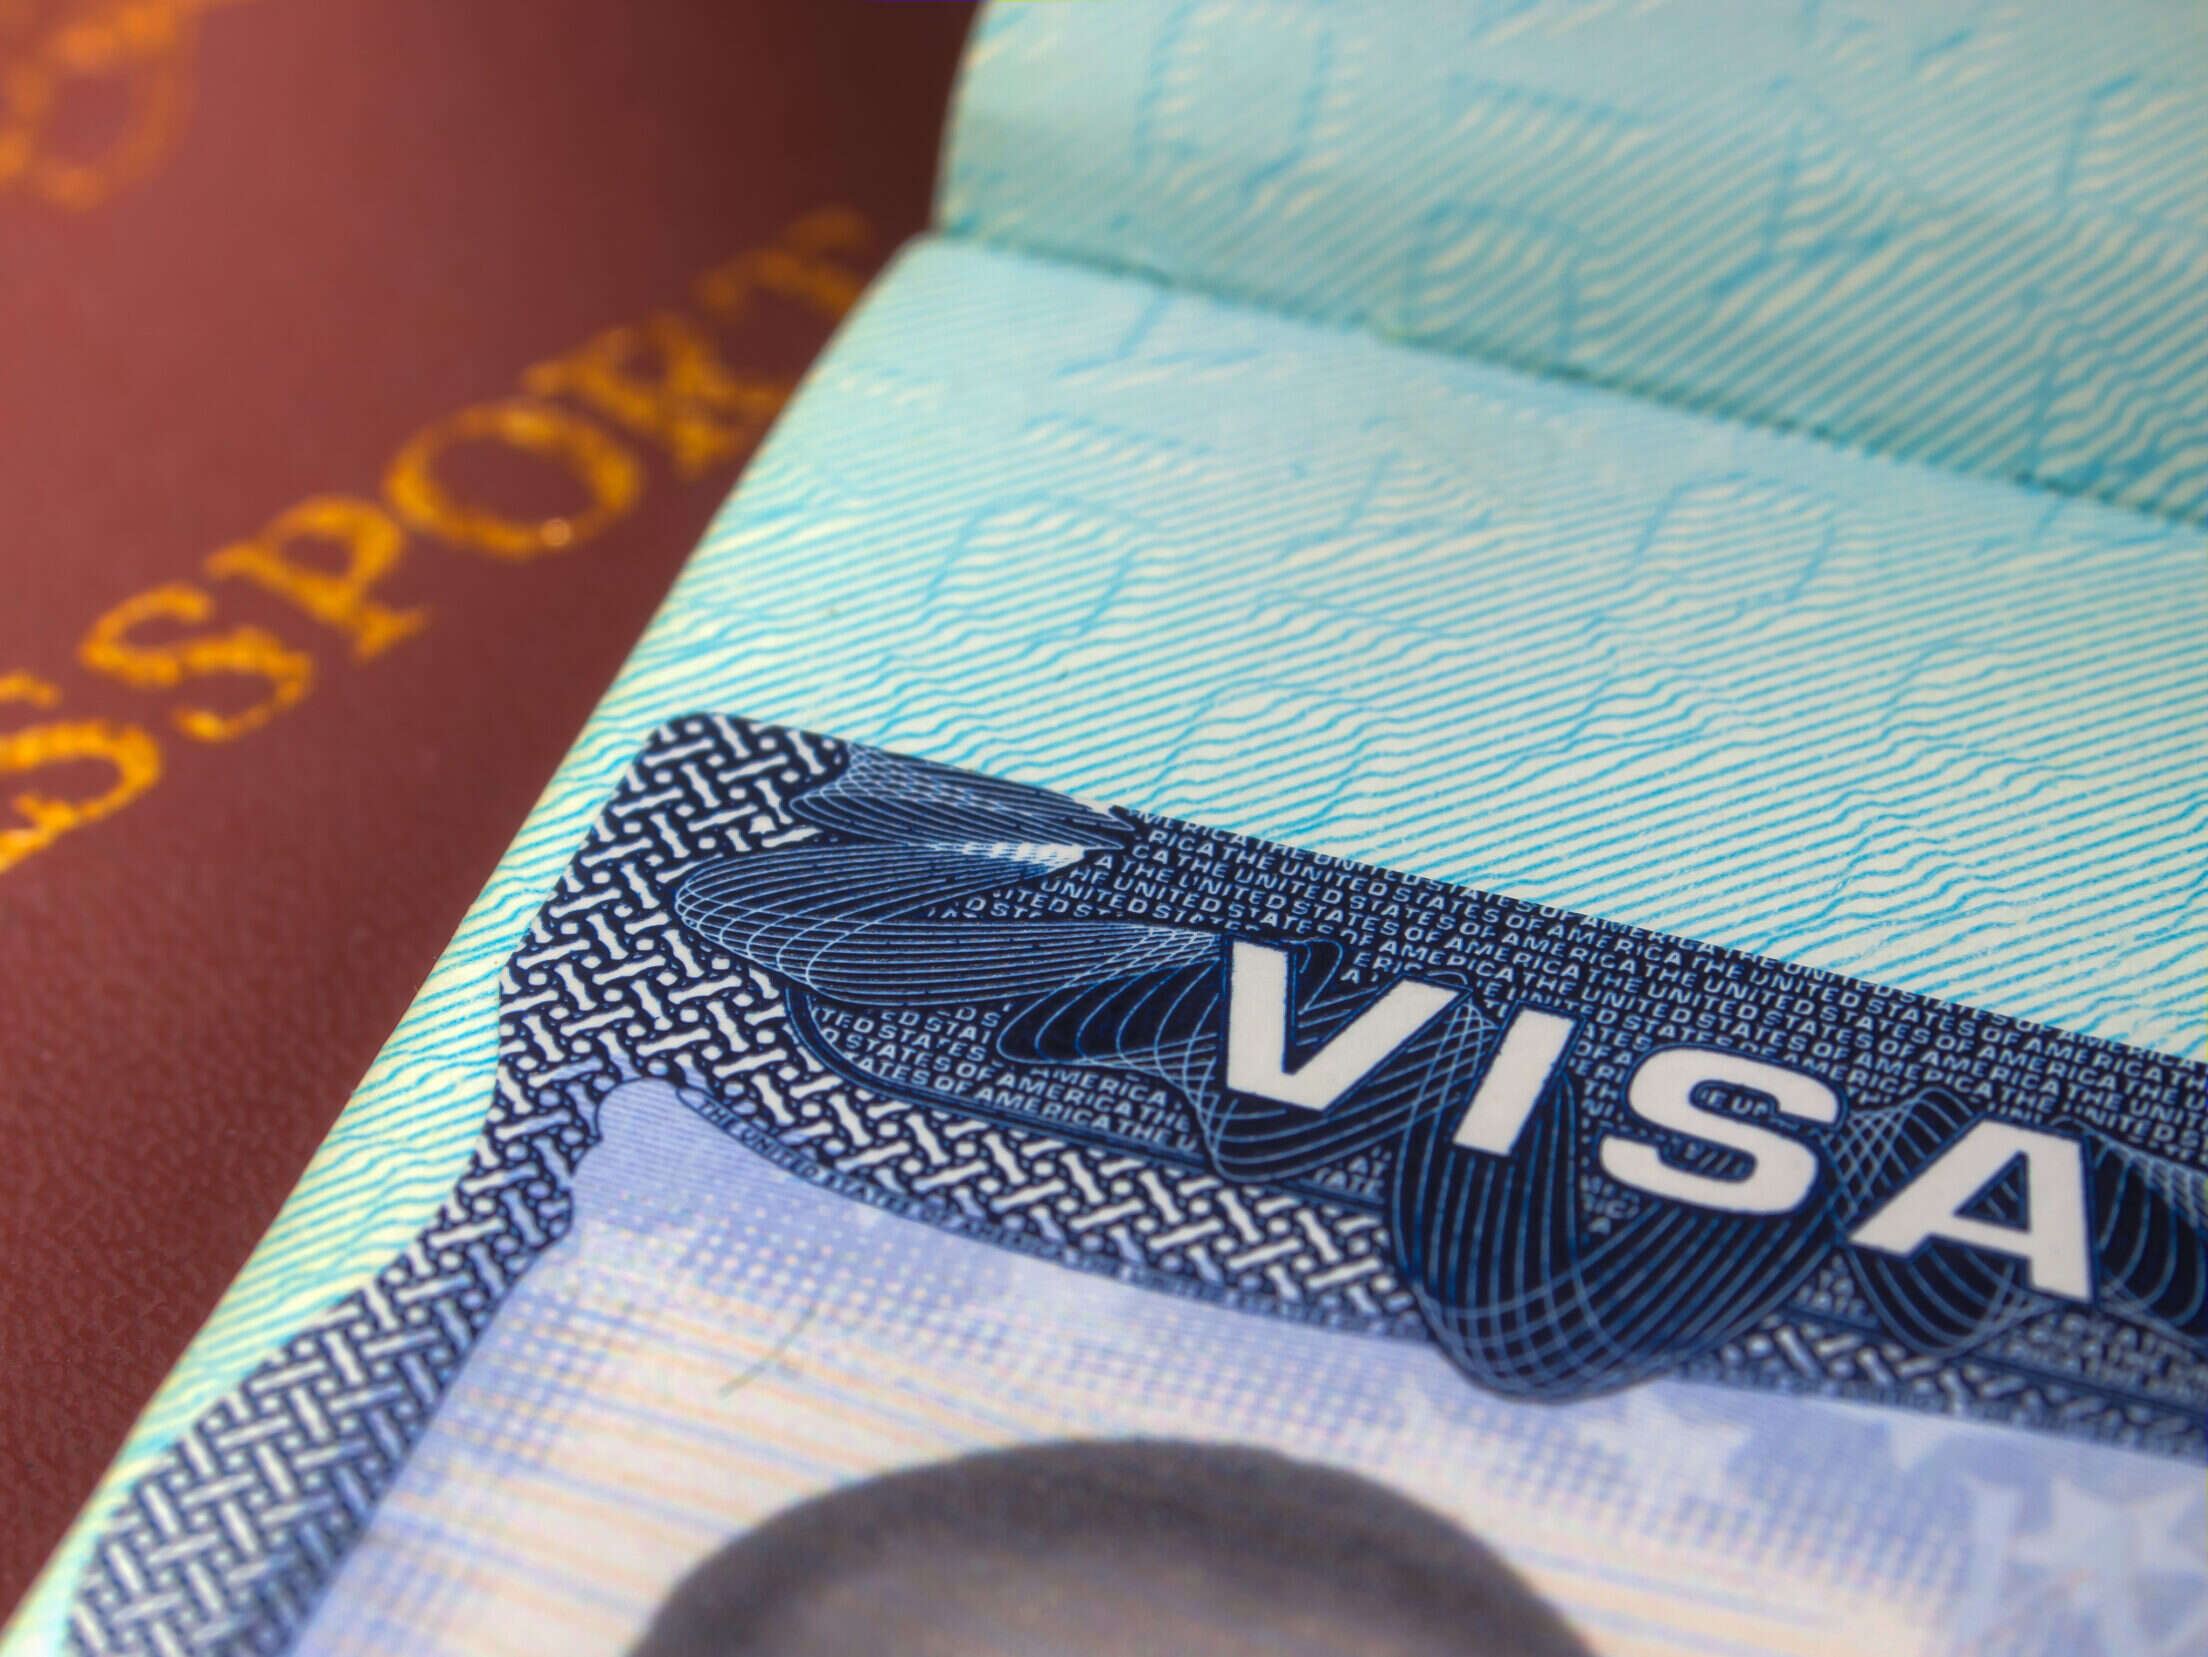 US passport visa